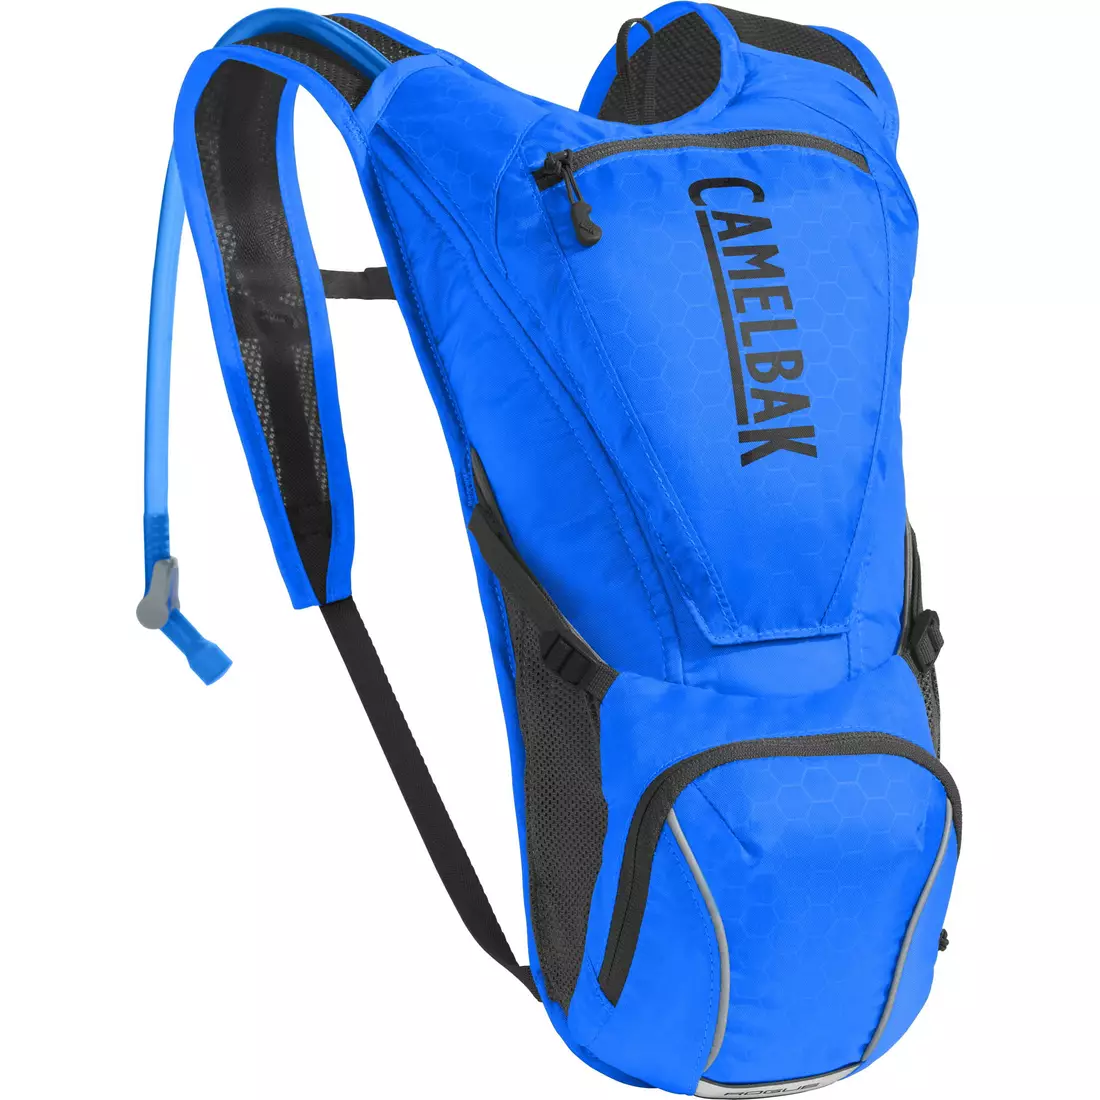 Camelbak SS17 backpack with water bladder Rogue 85oz/ 2.5L Carve Blue/Black 1120403900